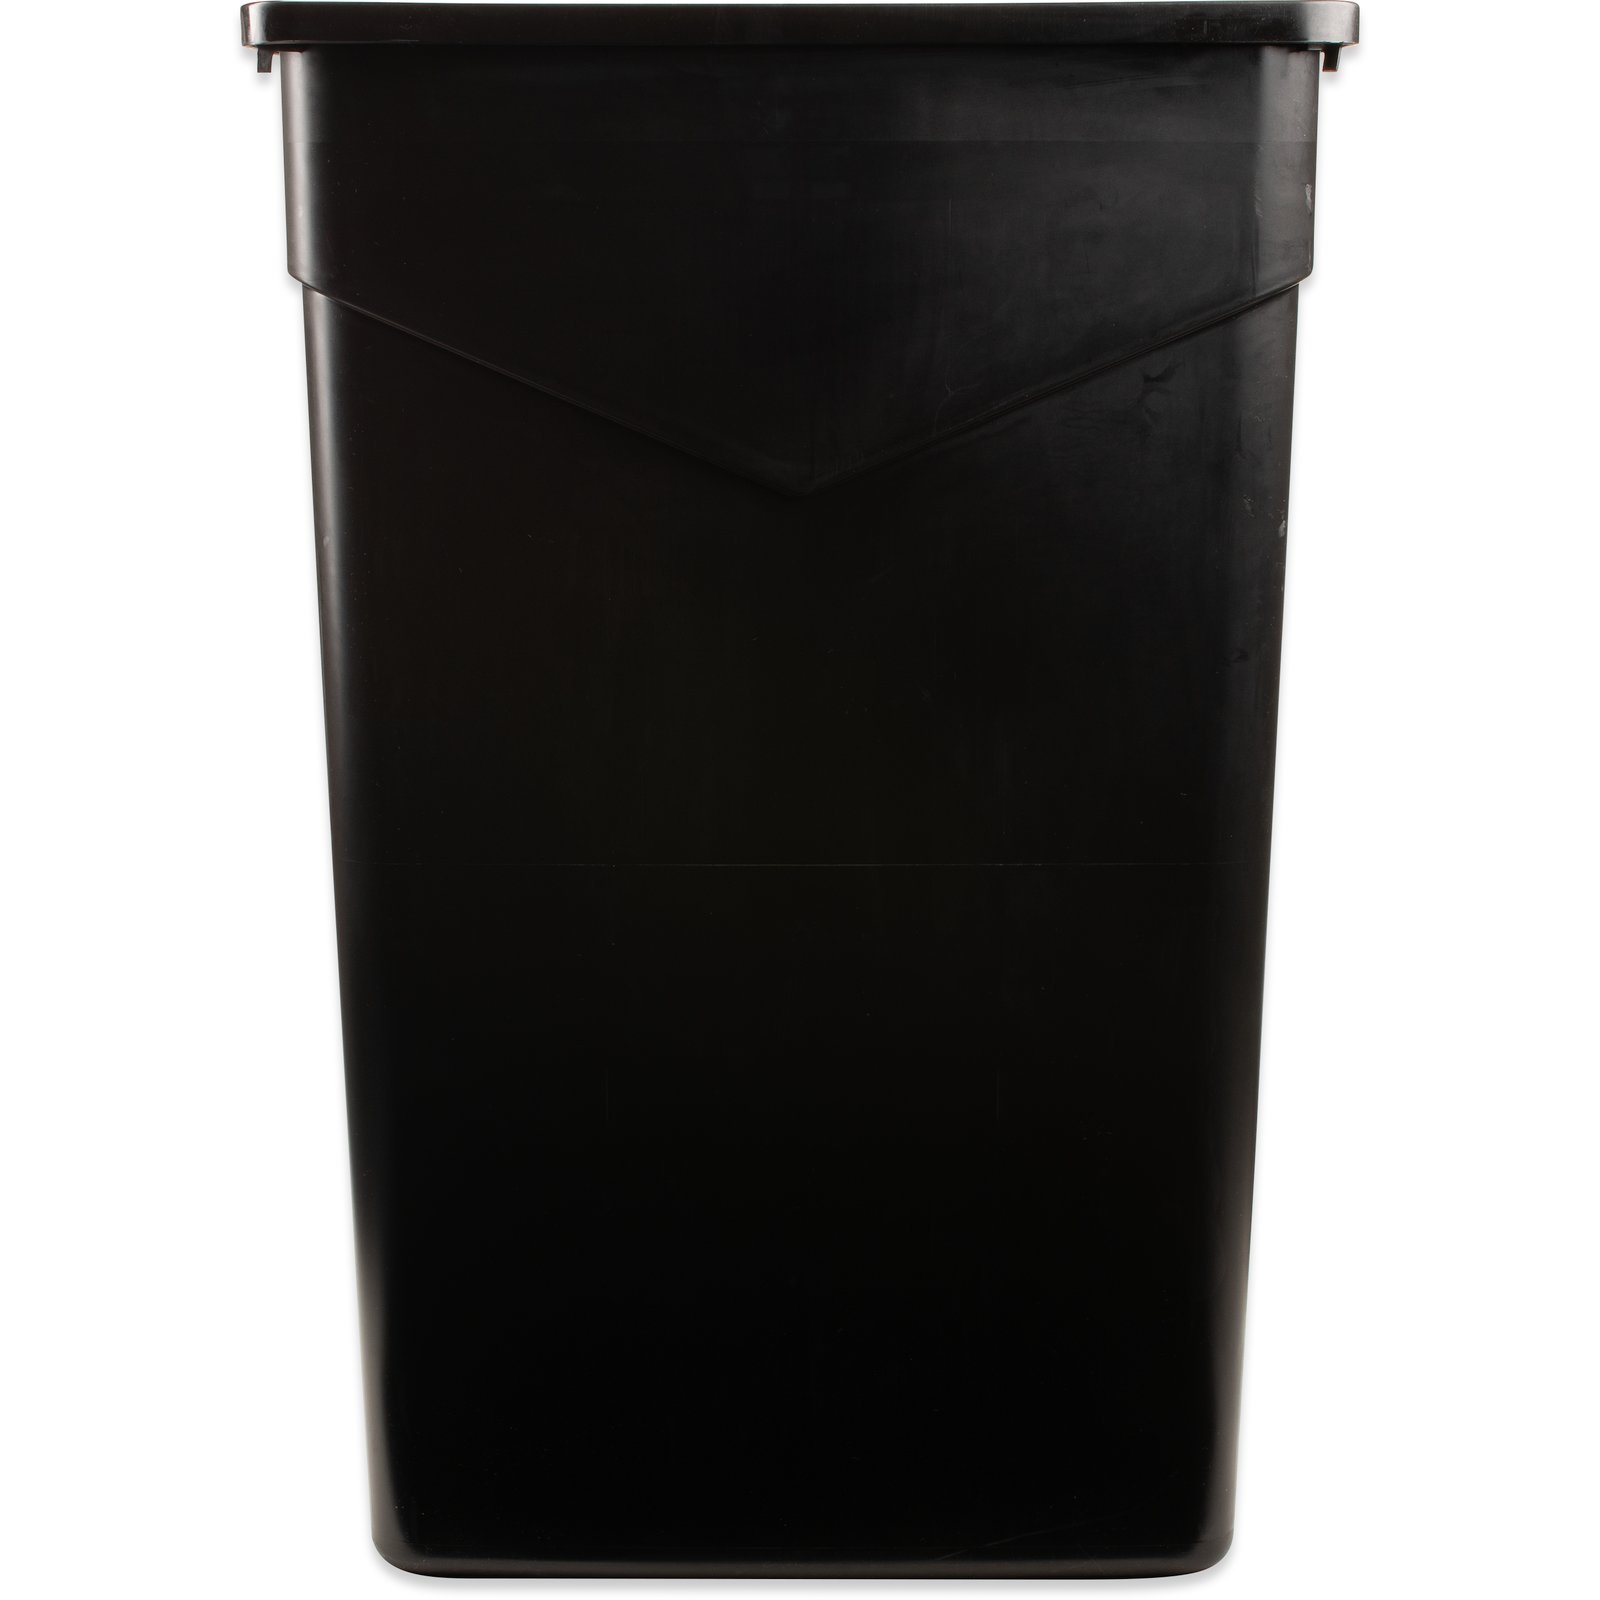 TrimLine Rectangle Waste 
Container, 23 Gallon, Black - 
(4/cs)